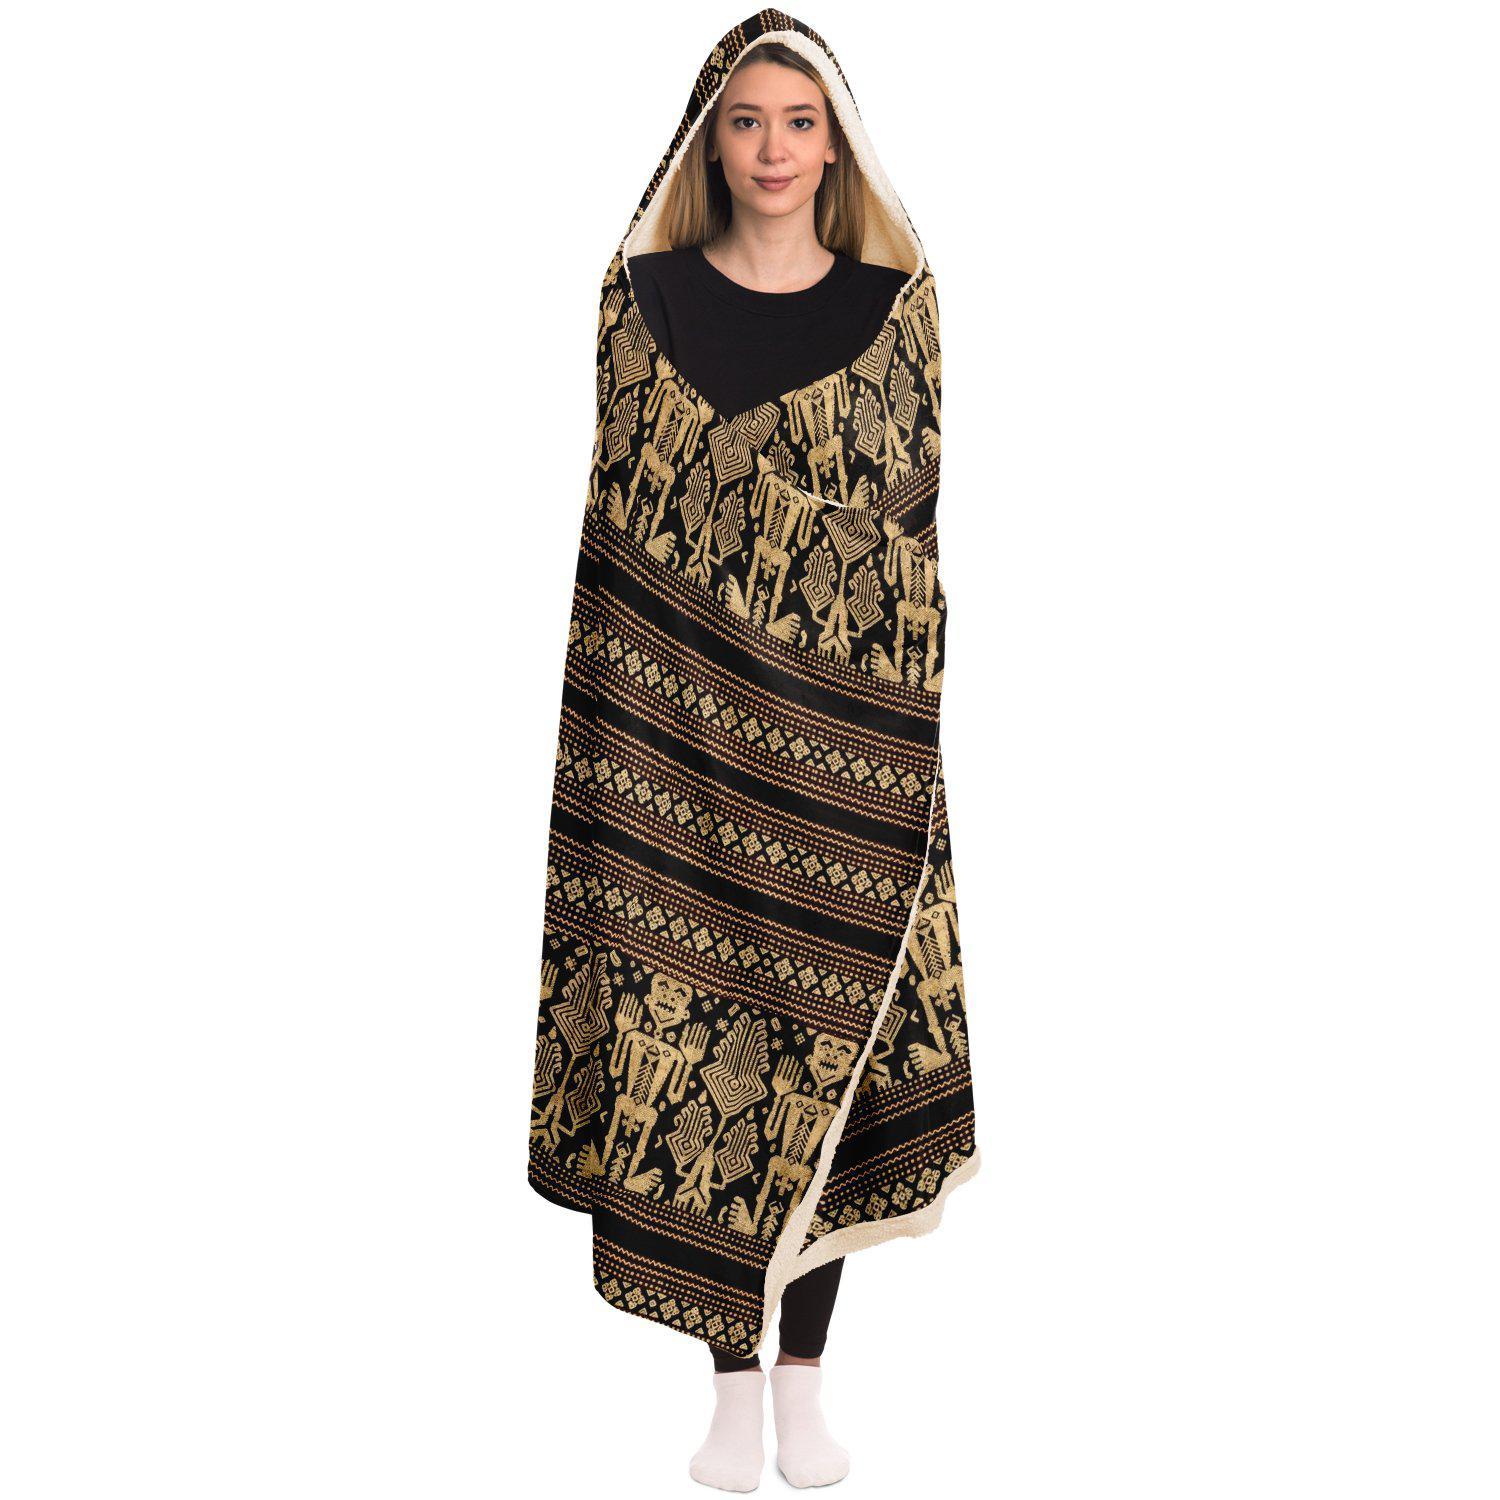 Hooded Blanket, Lombok Culture Traditional Indonesian Design - Sacred Surreal